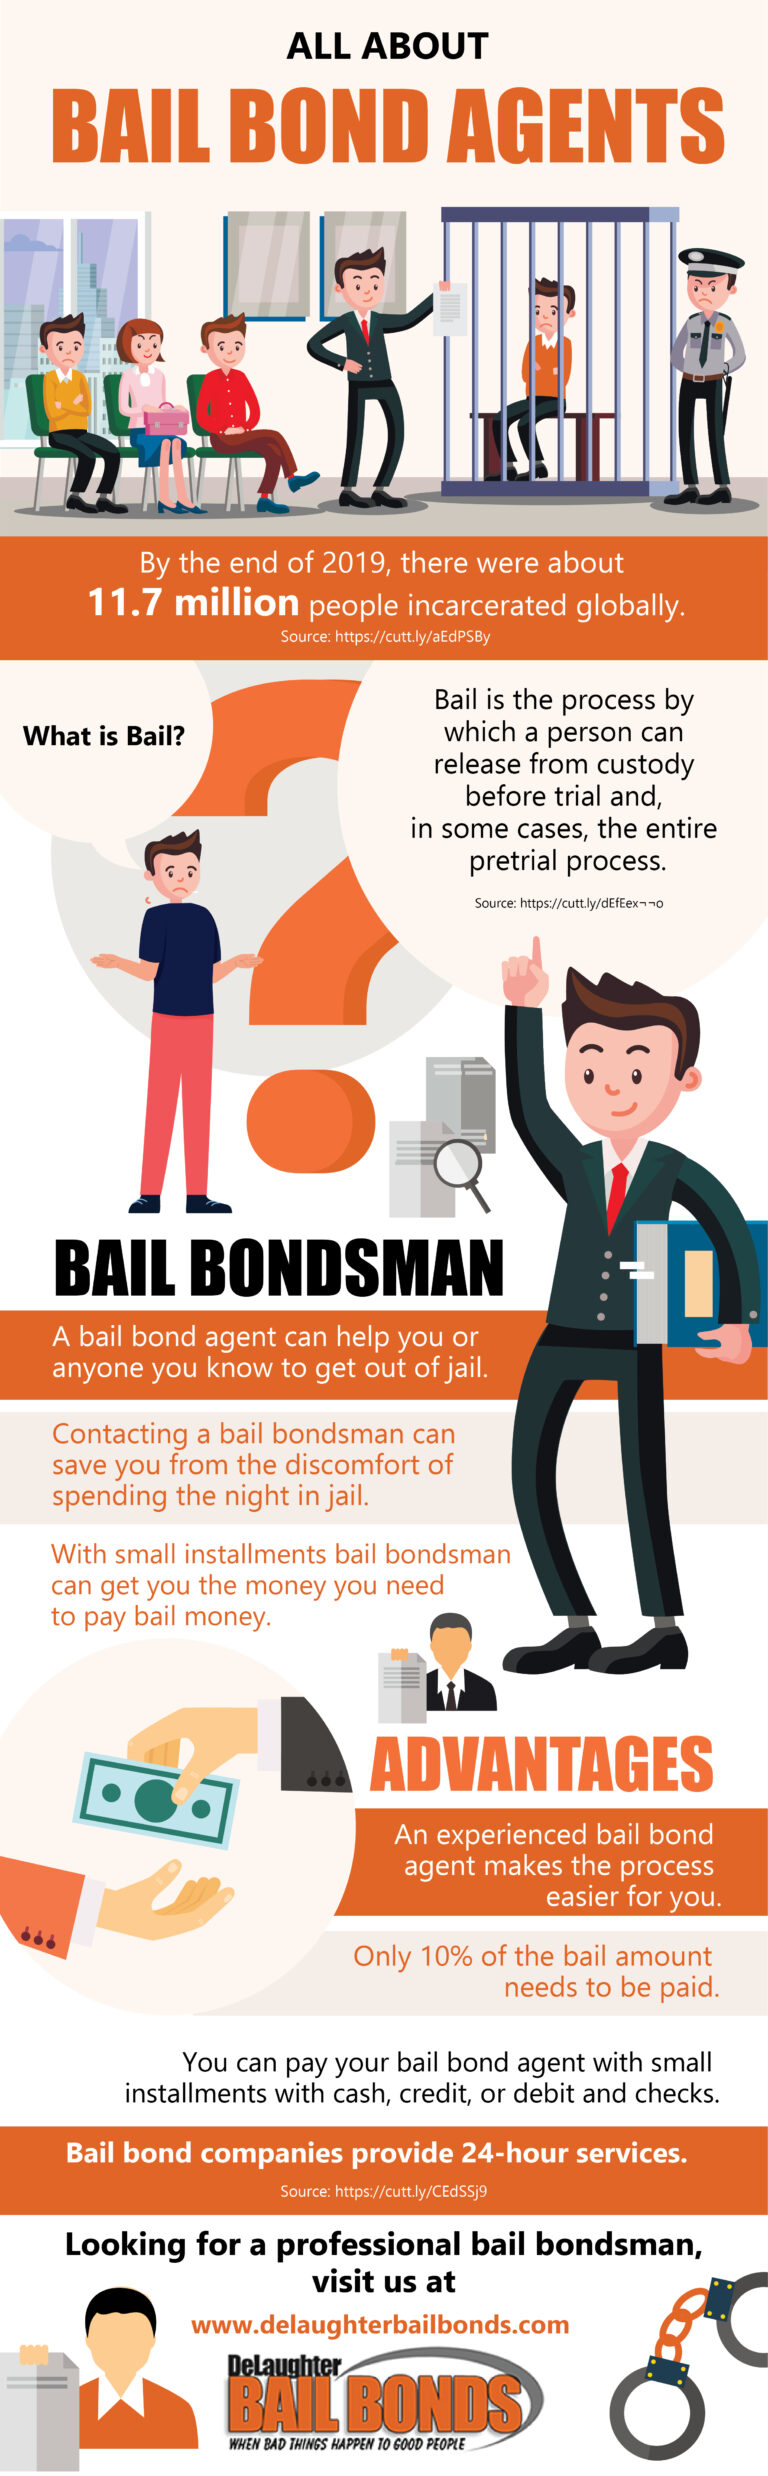 All About Bail Bond Agents - DeLaughter Bail Bonds